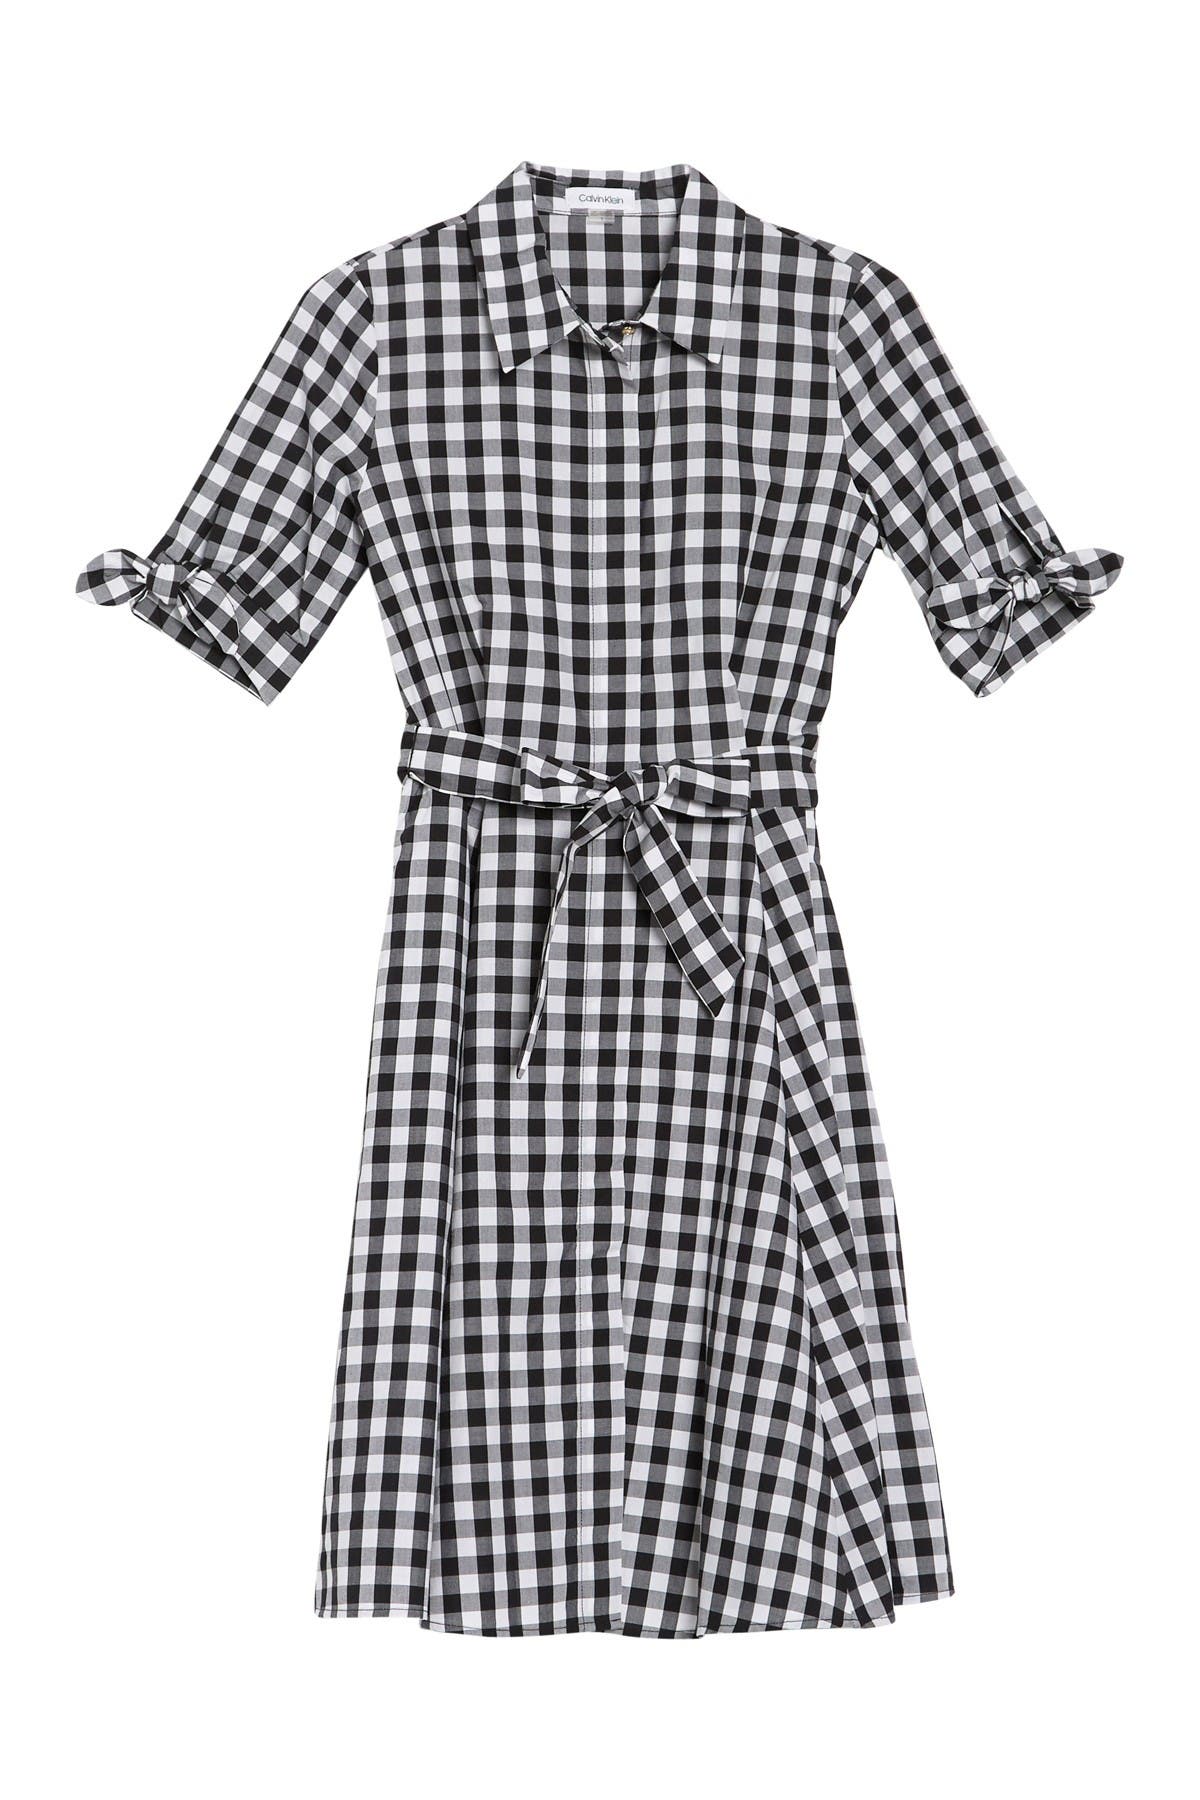 calvin klein checkered dress